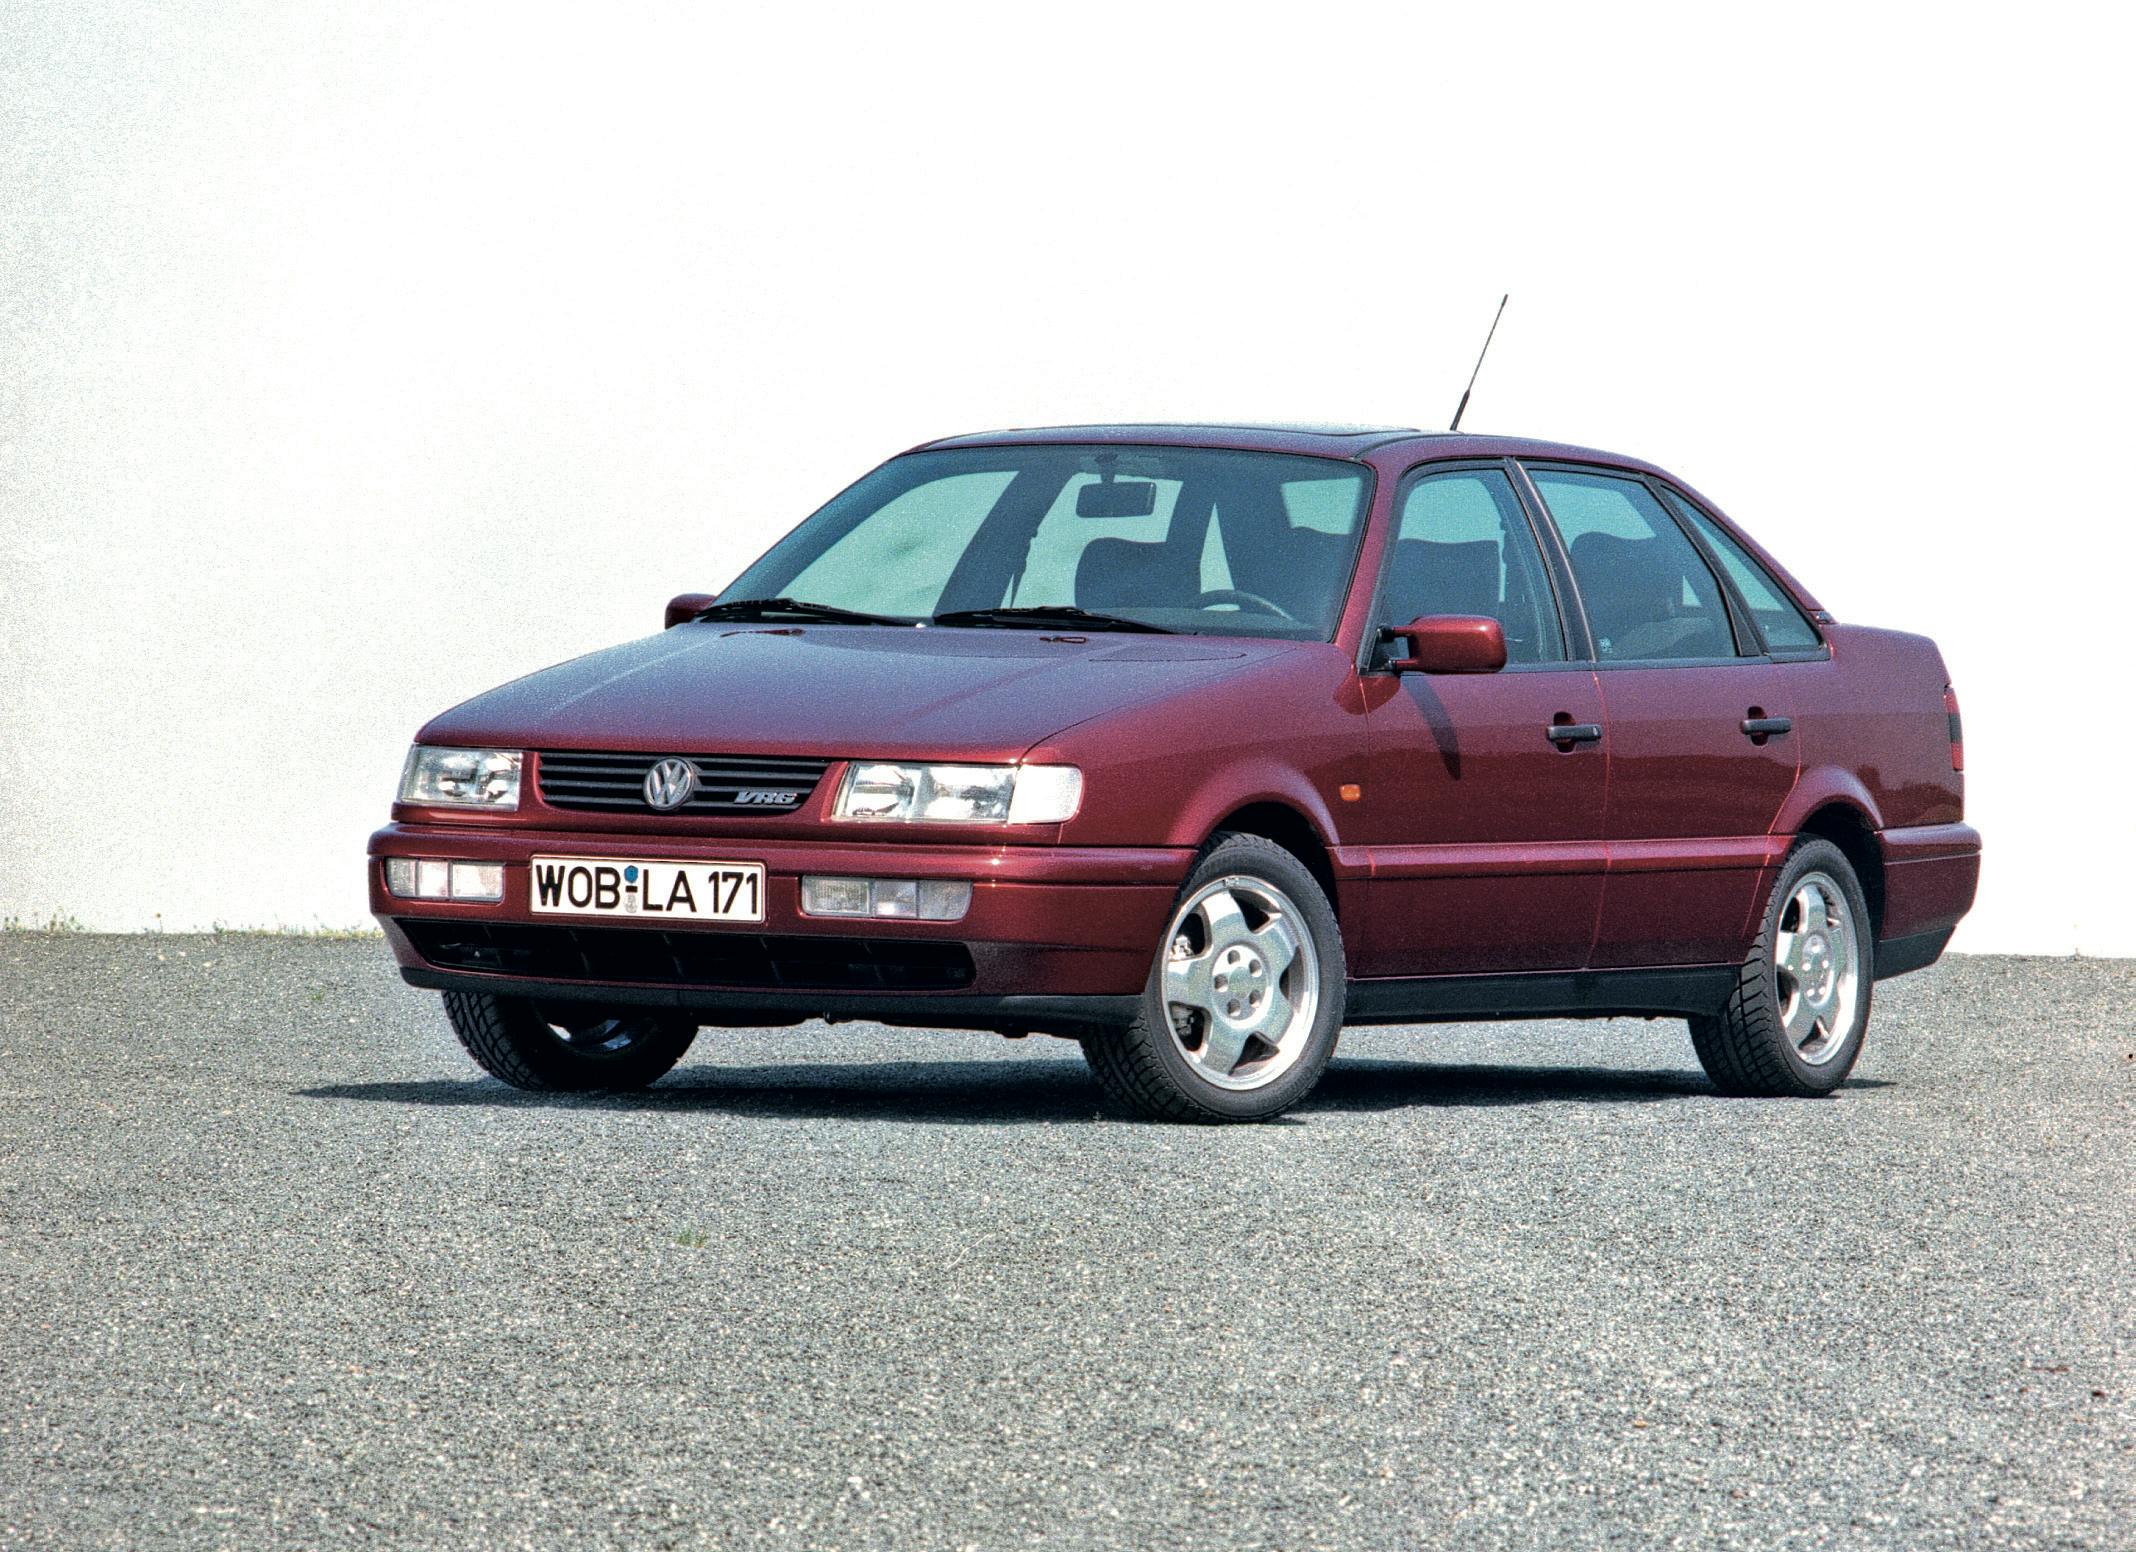 Volkswagen Passat VR6 1993 front three quarter